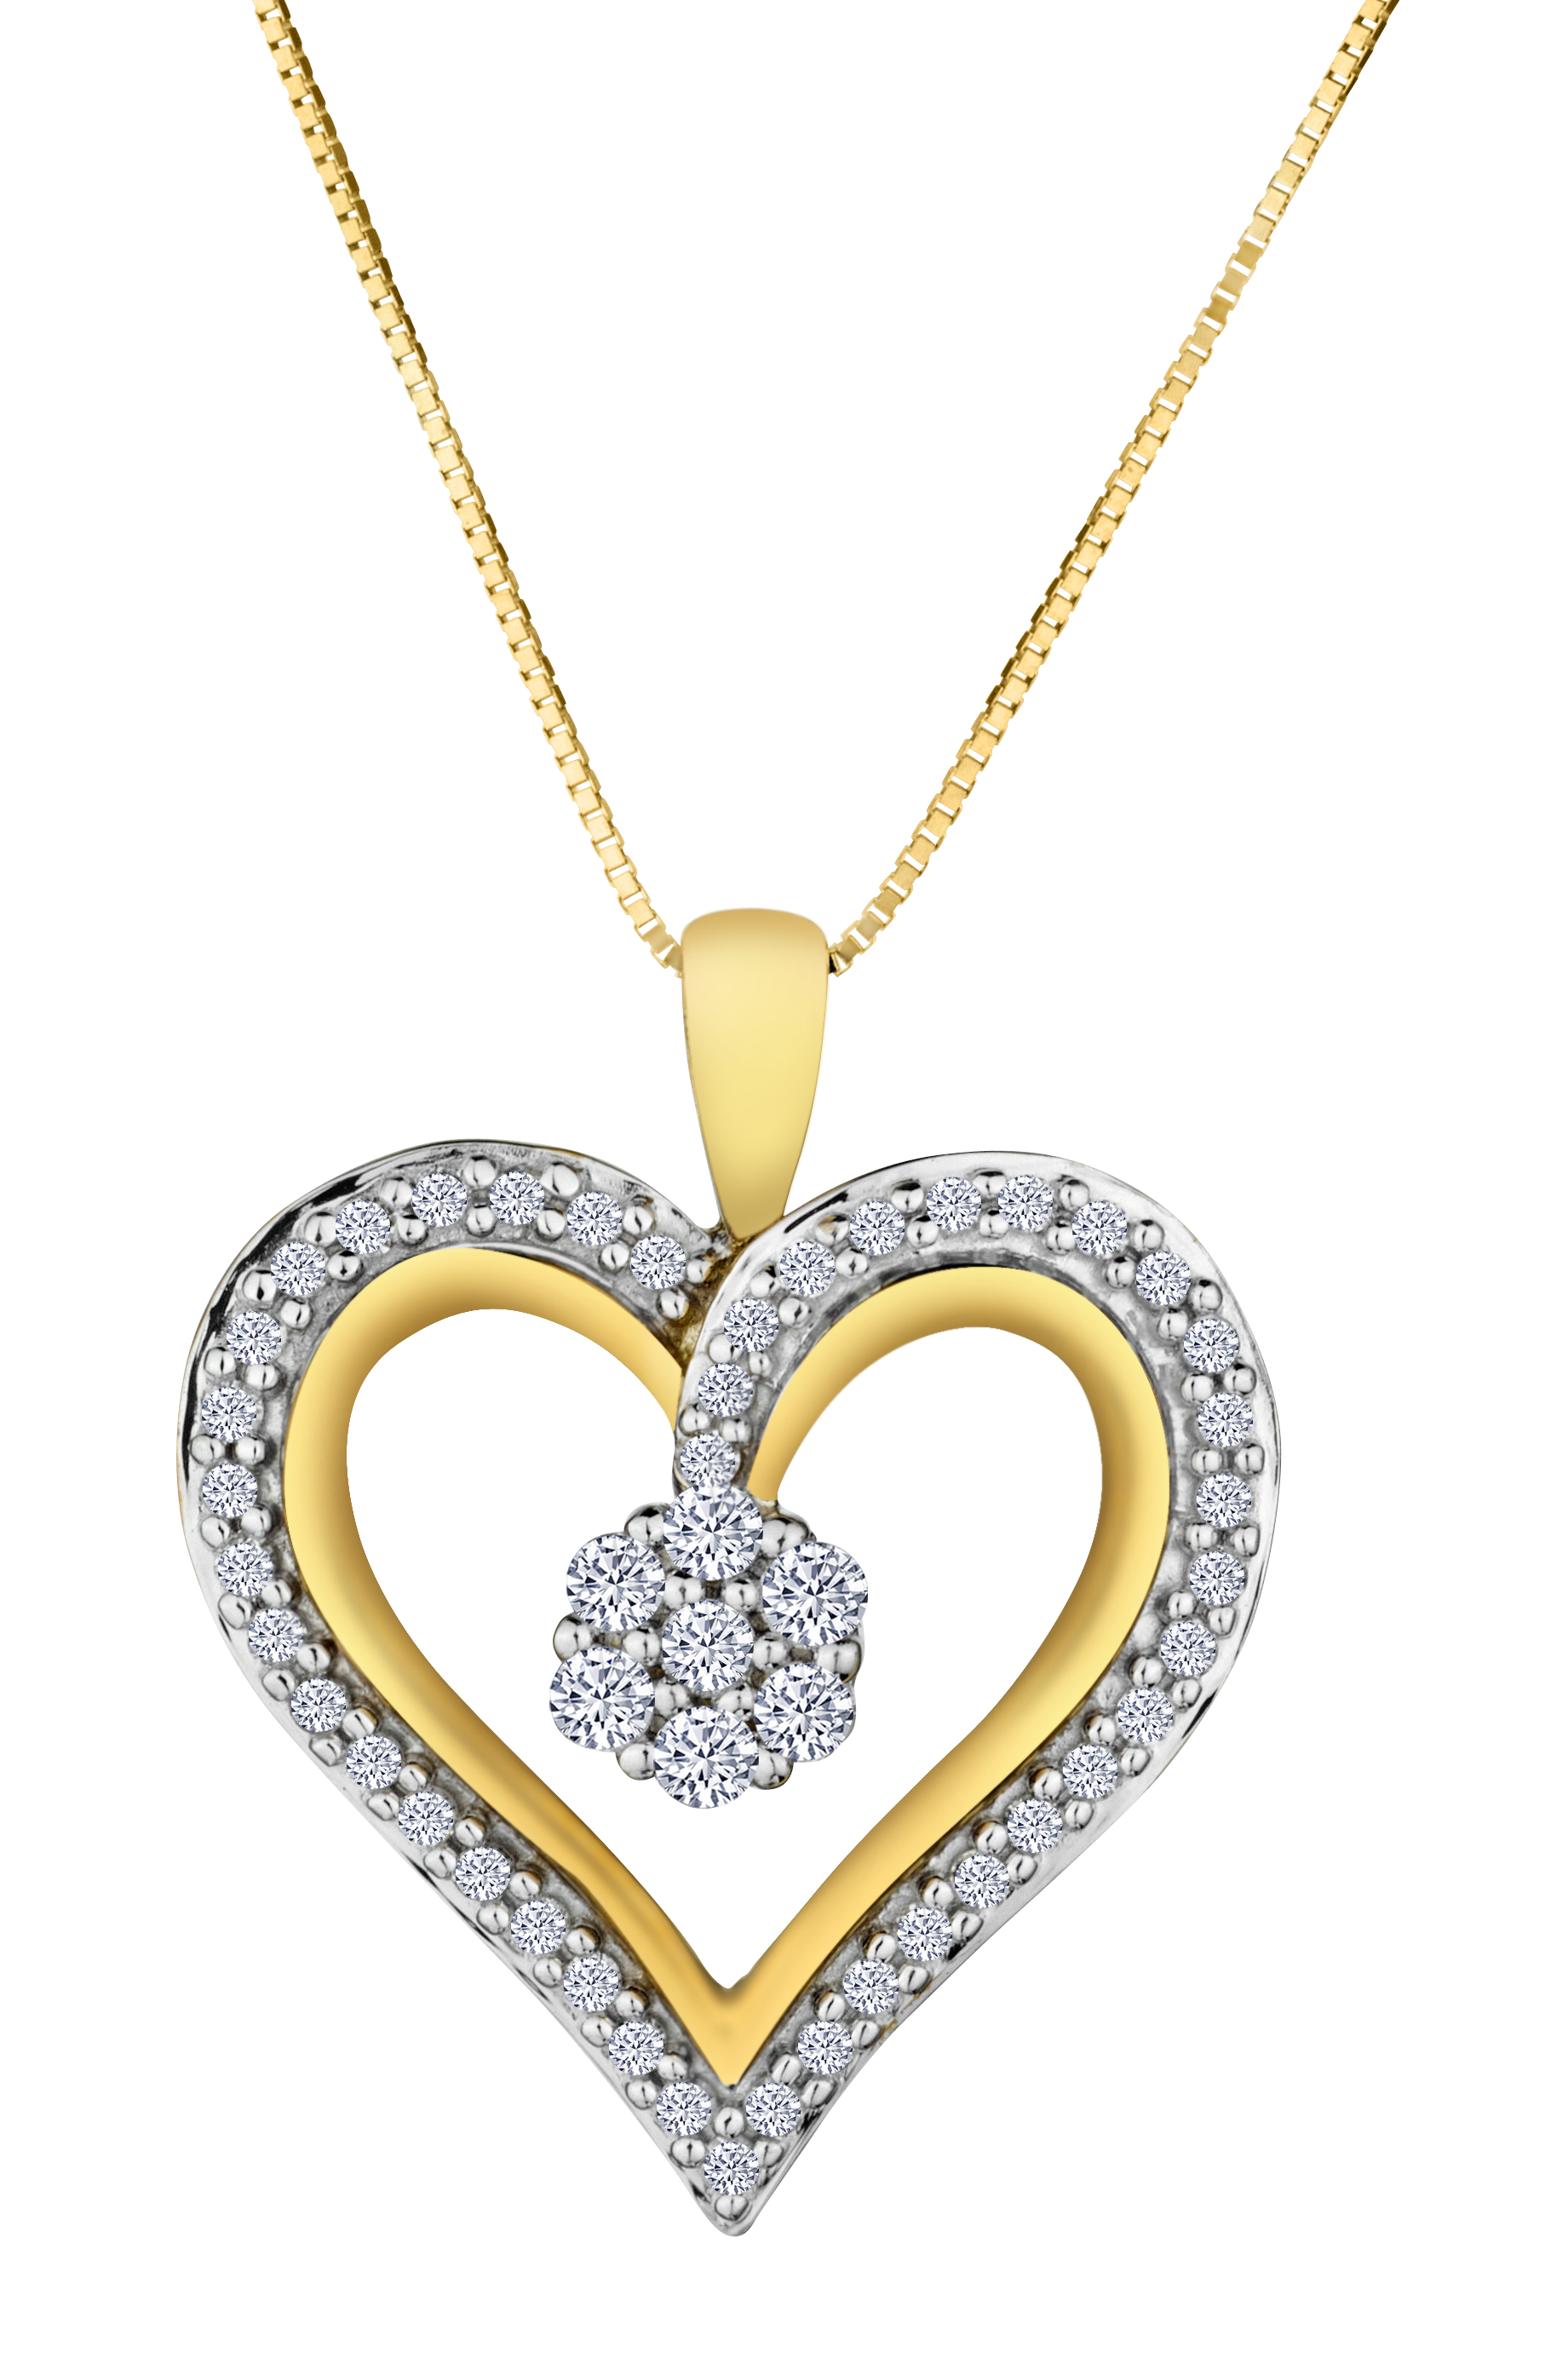 .33 Carat of Diamonds Heart Pendant, 10kt Yellow Gold.....................NOW